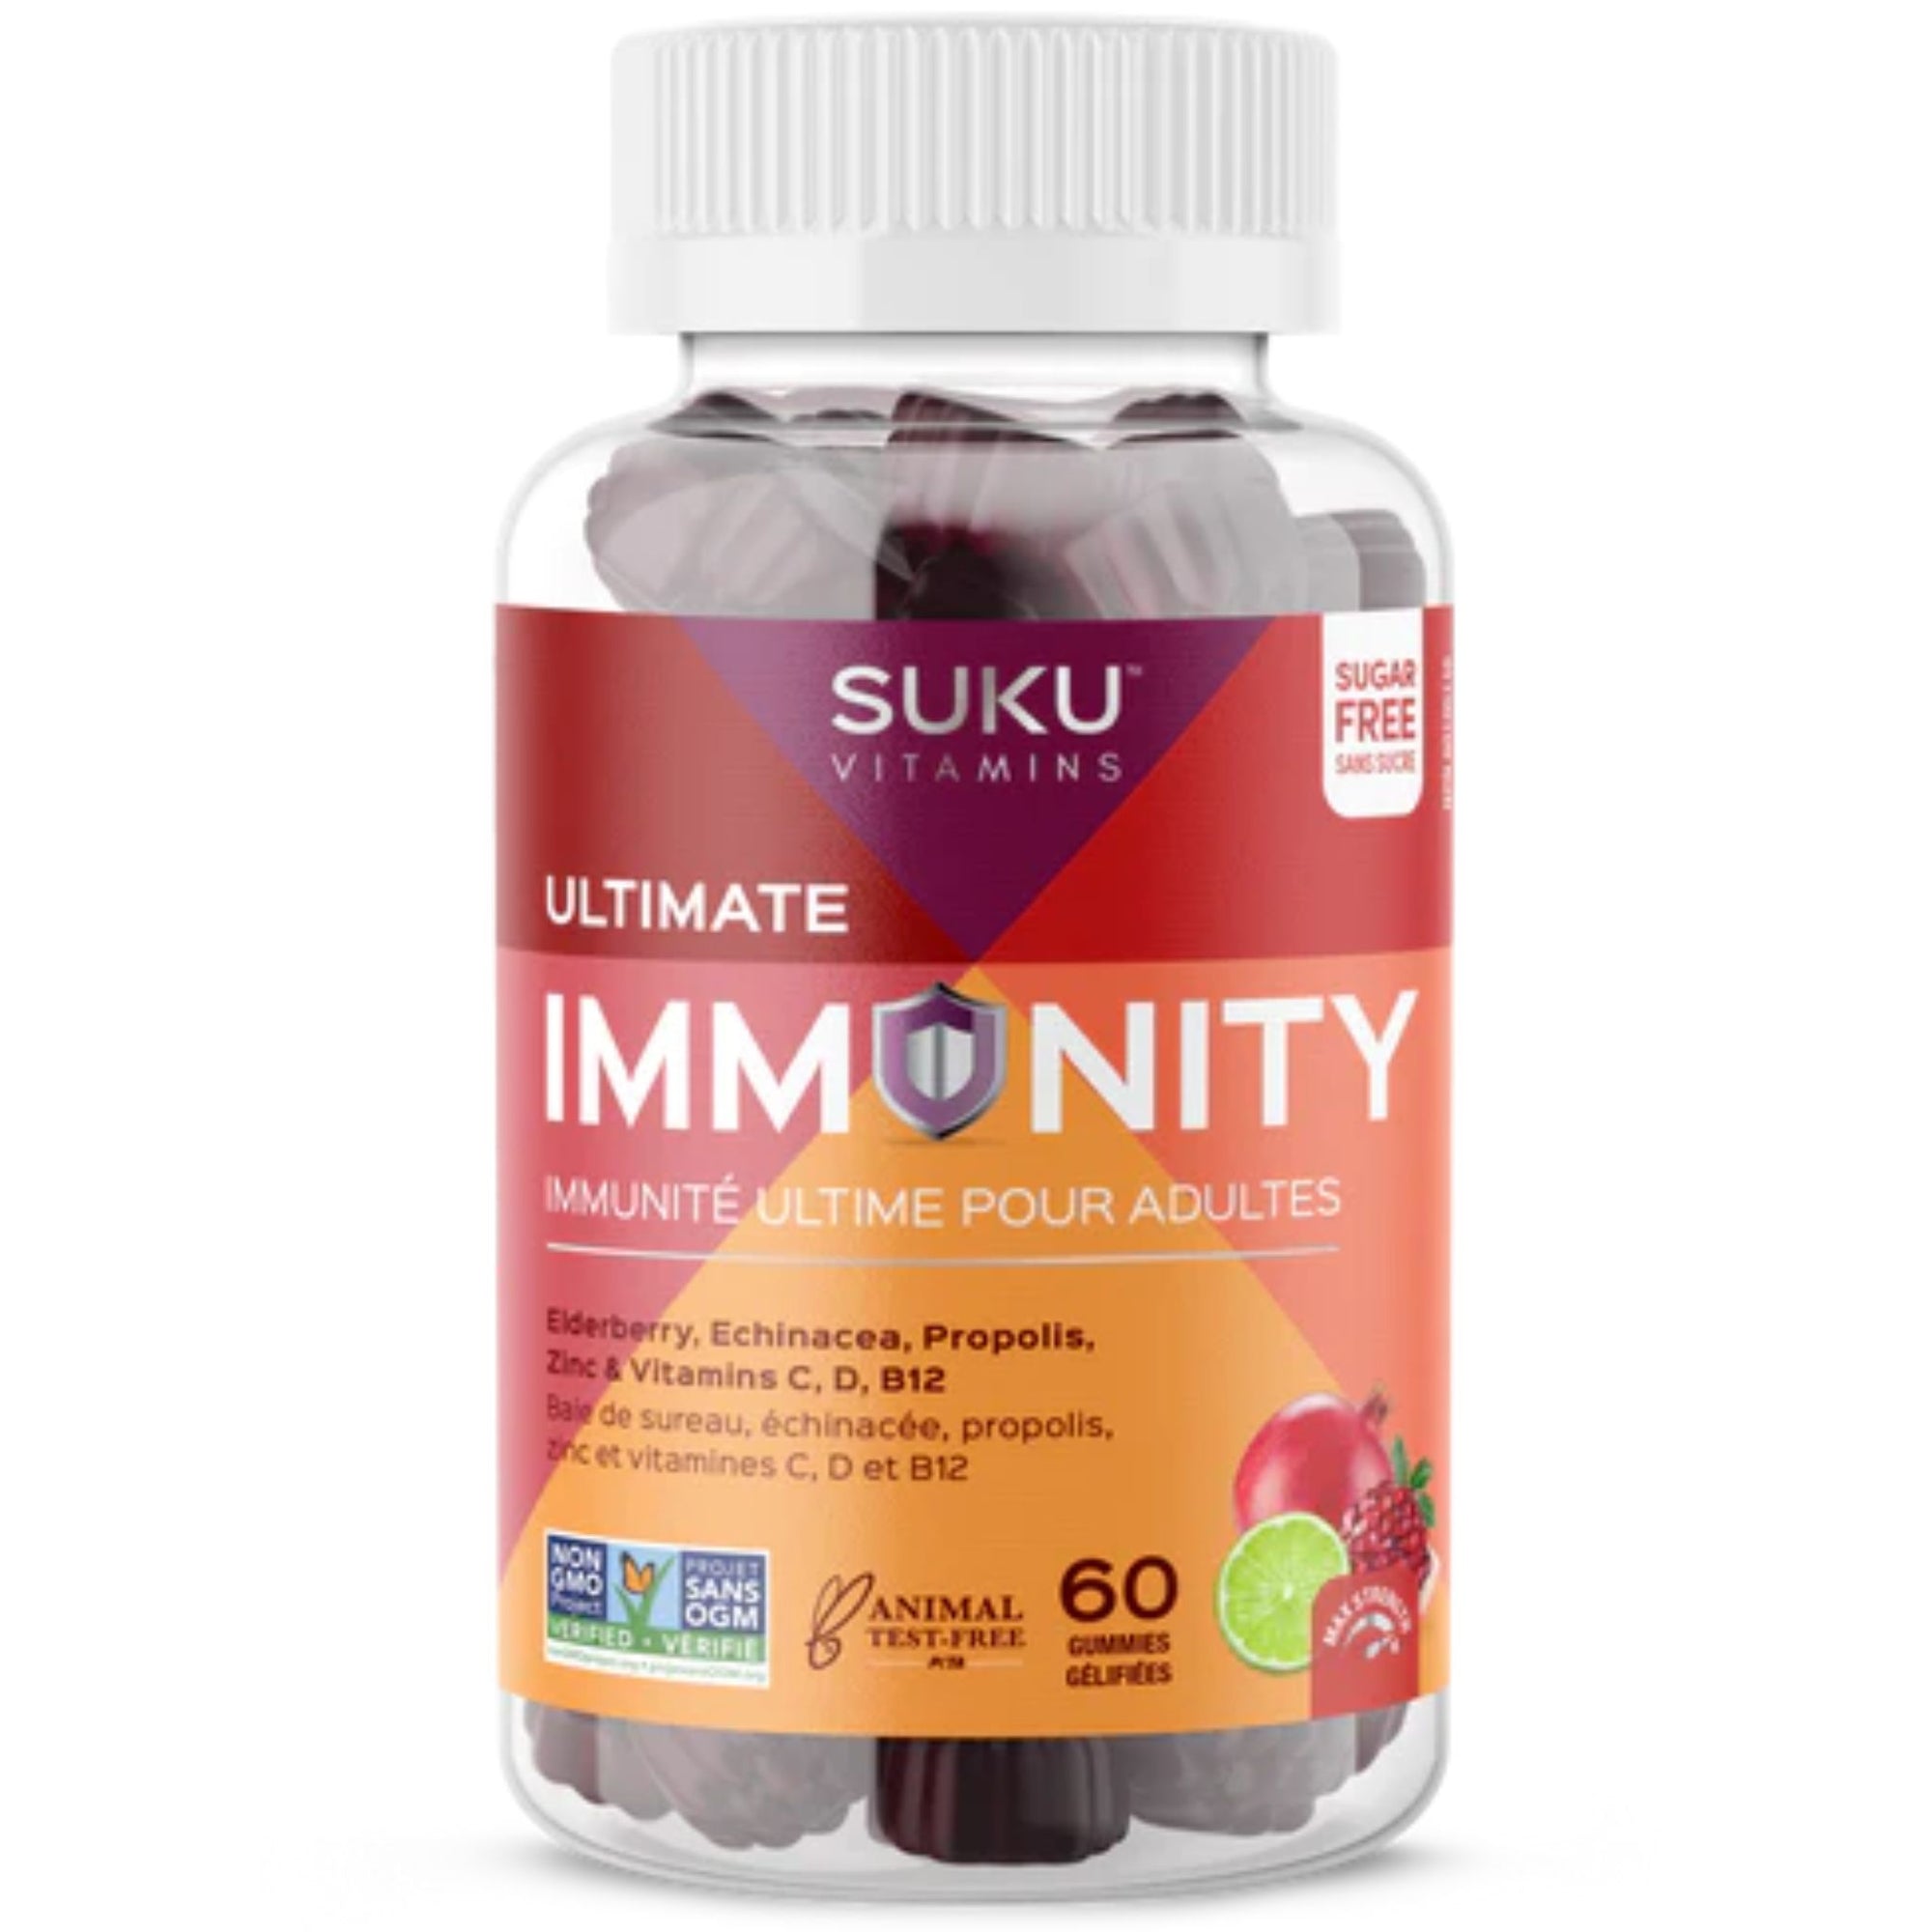 Suku Ultimate Immunity Gummies bottle with vibrant coloured gummies visible. 60 gummies per bottle. Sugar-free & Non-GMO